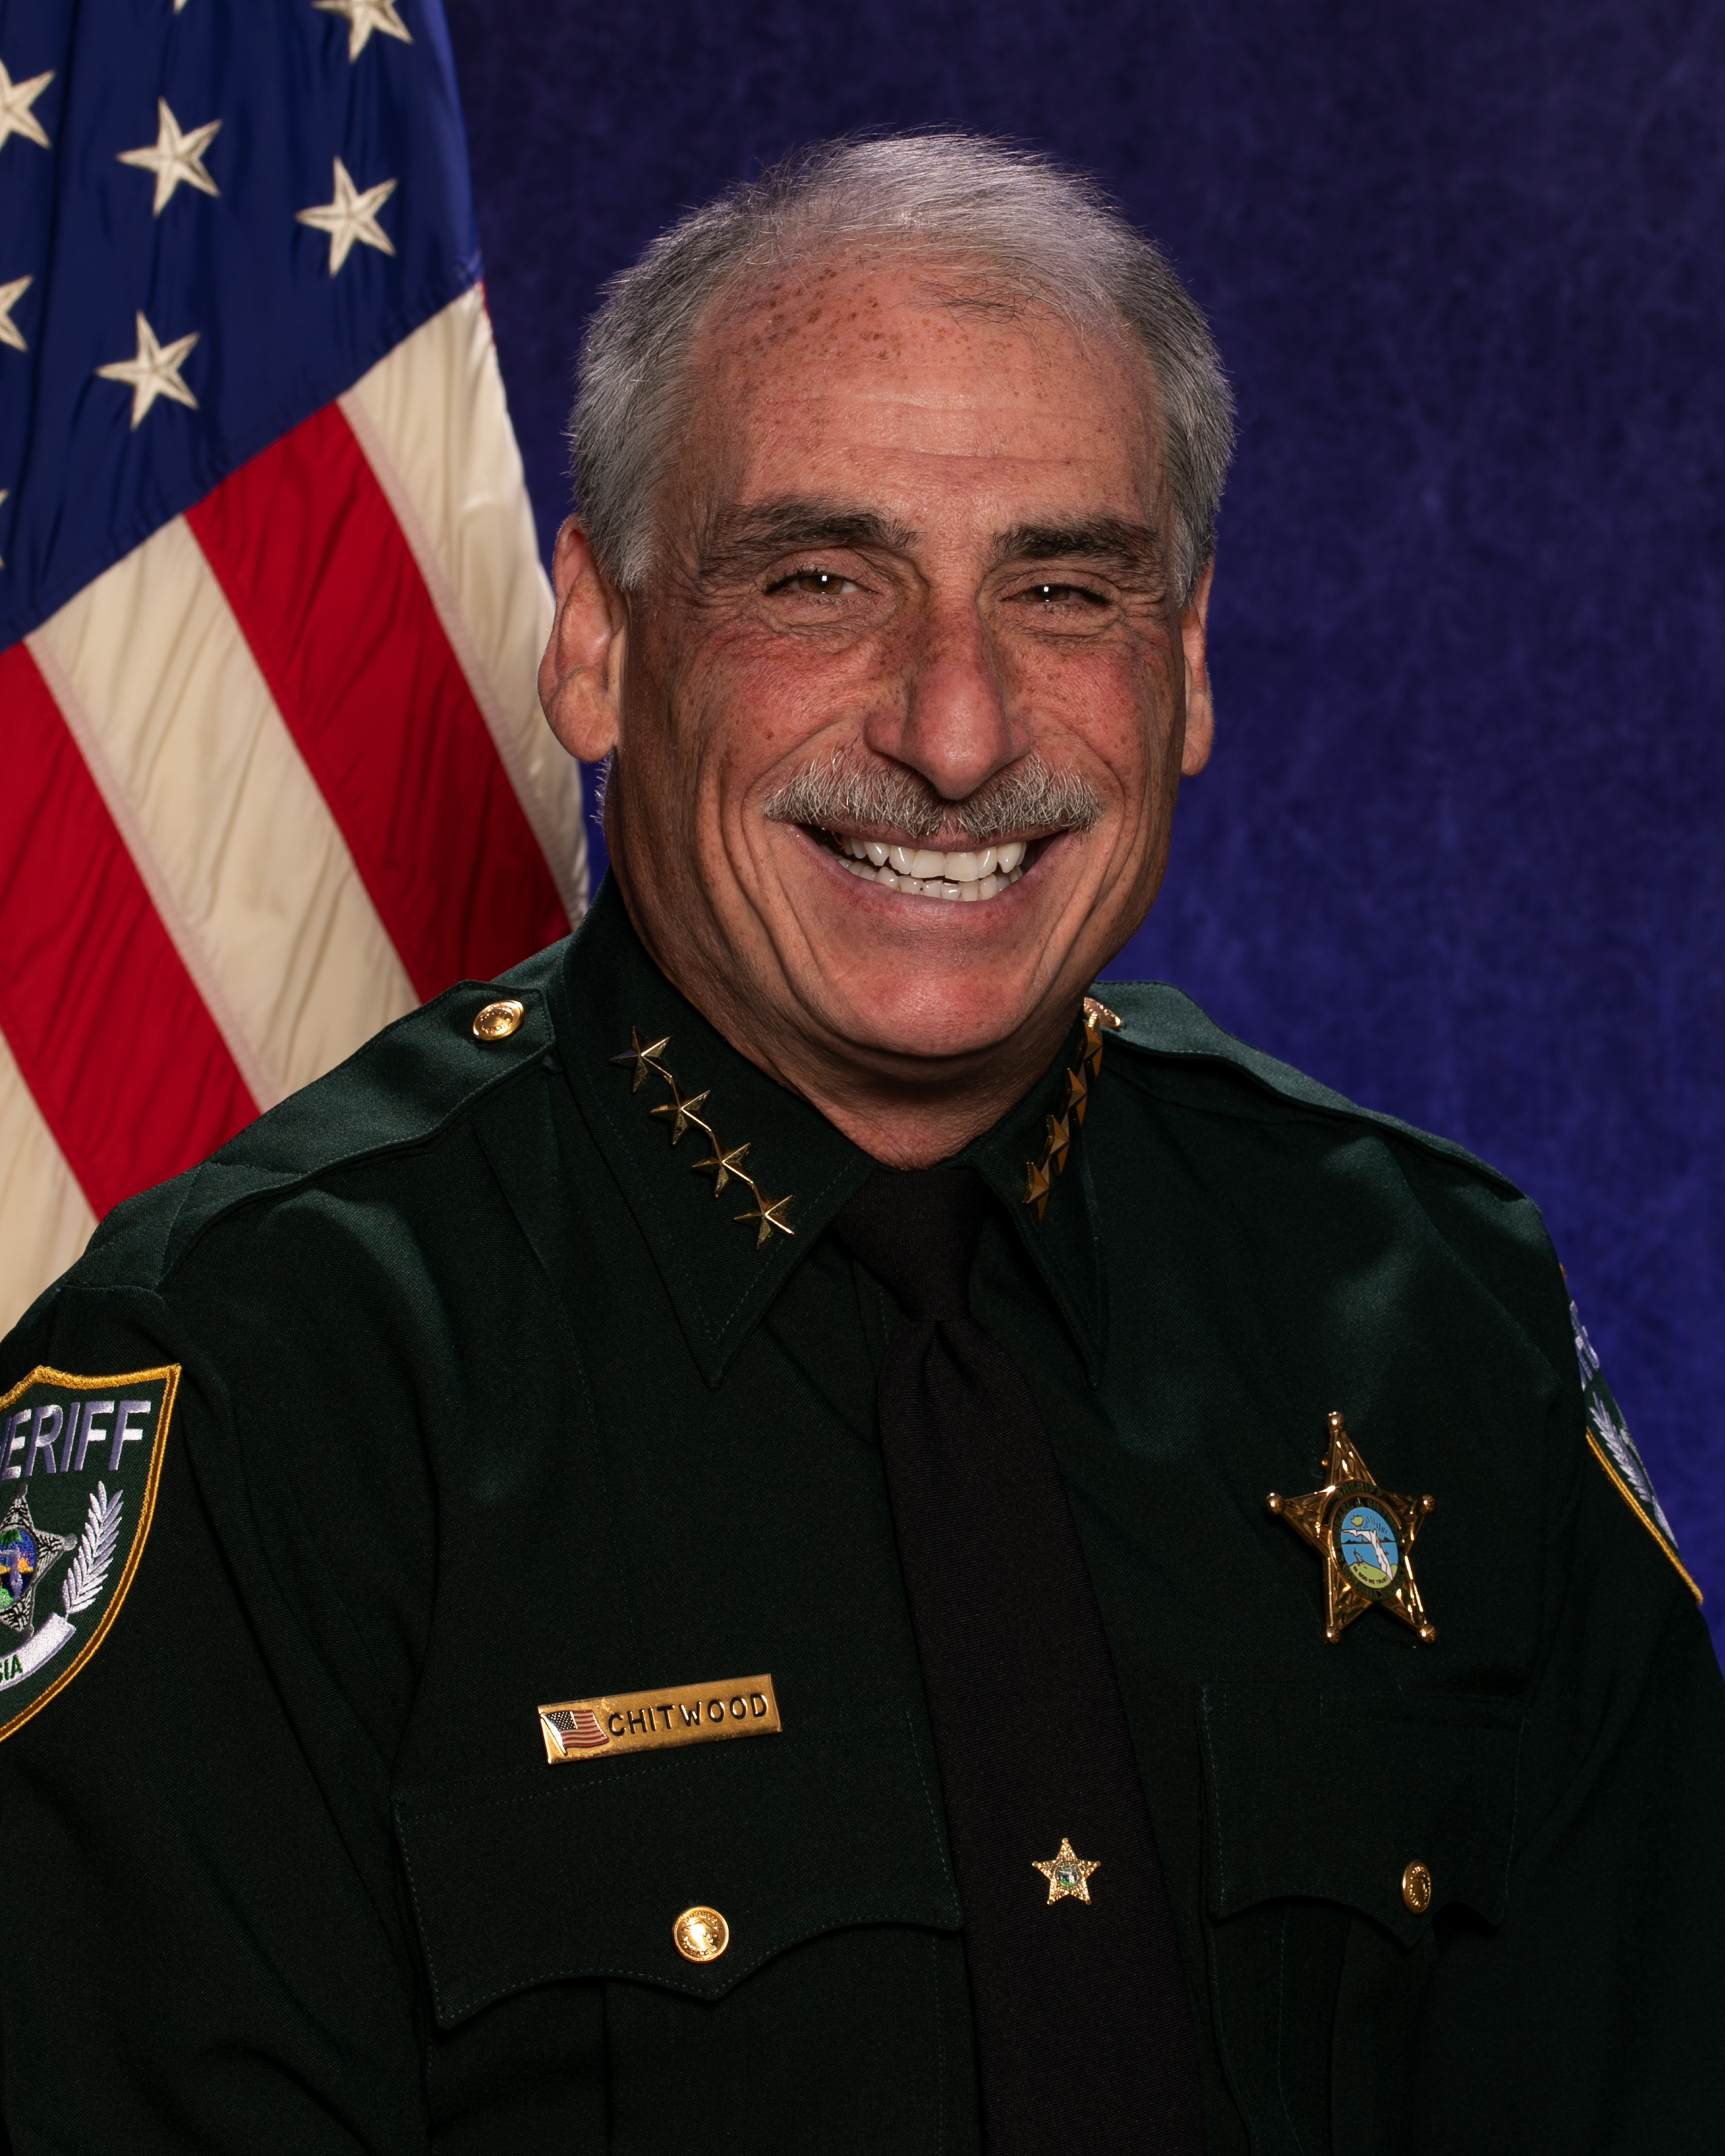 Sheriff Michael J Chitwood Picture